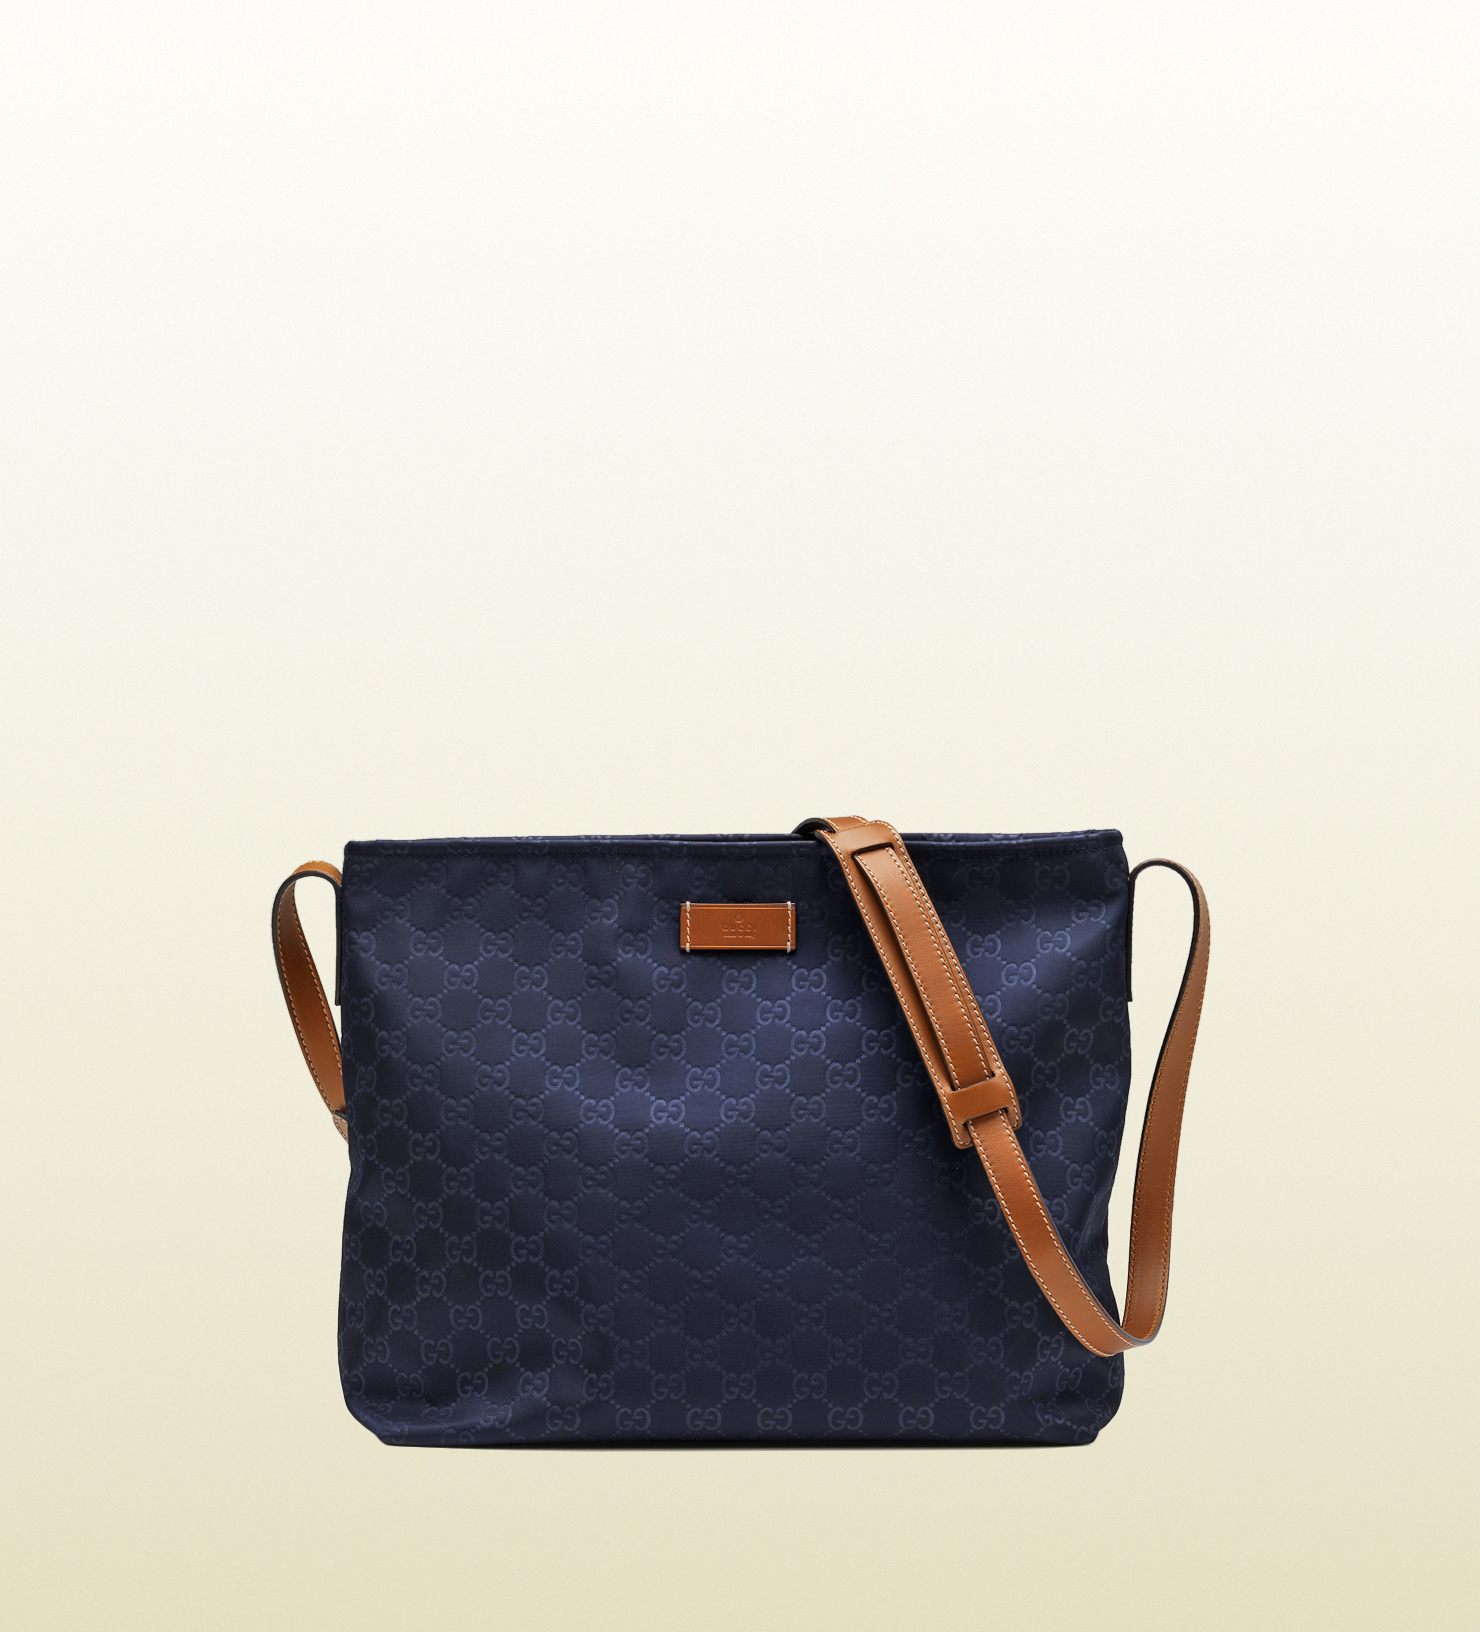 Lyst - Gucci Blue Nylon Ssima Messenger Bag in Blue for Men